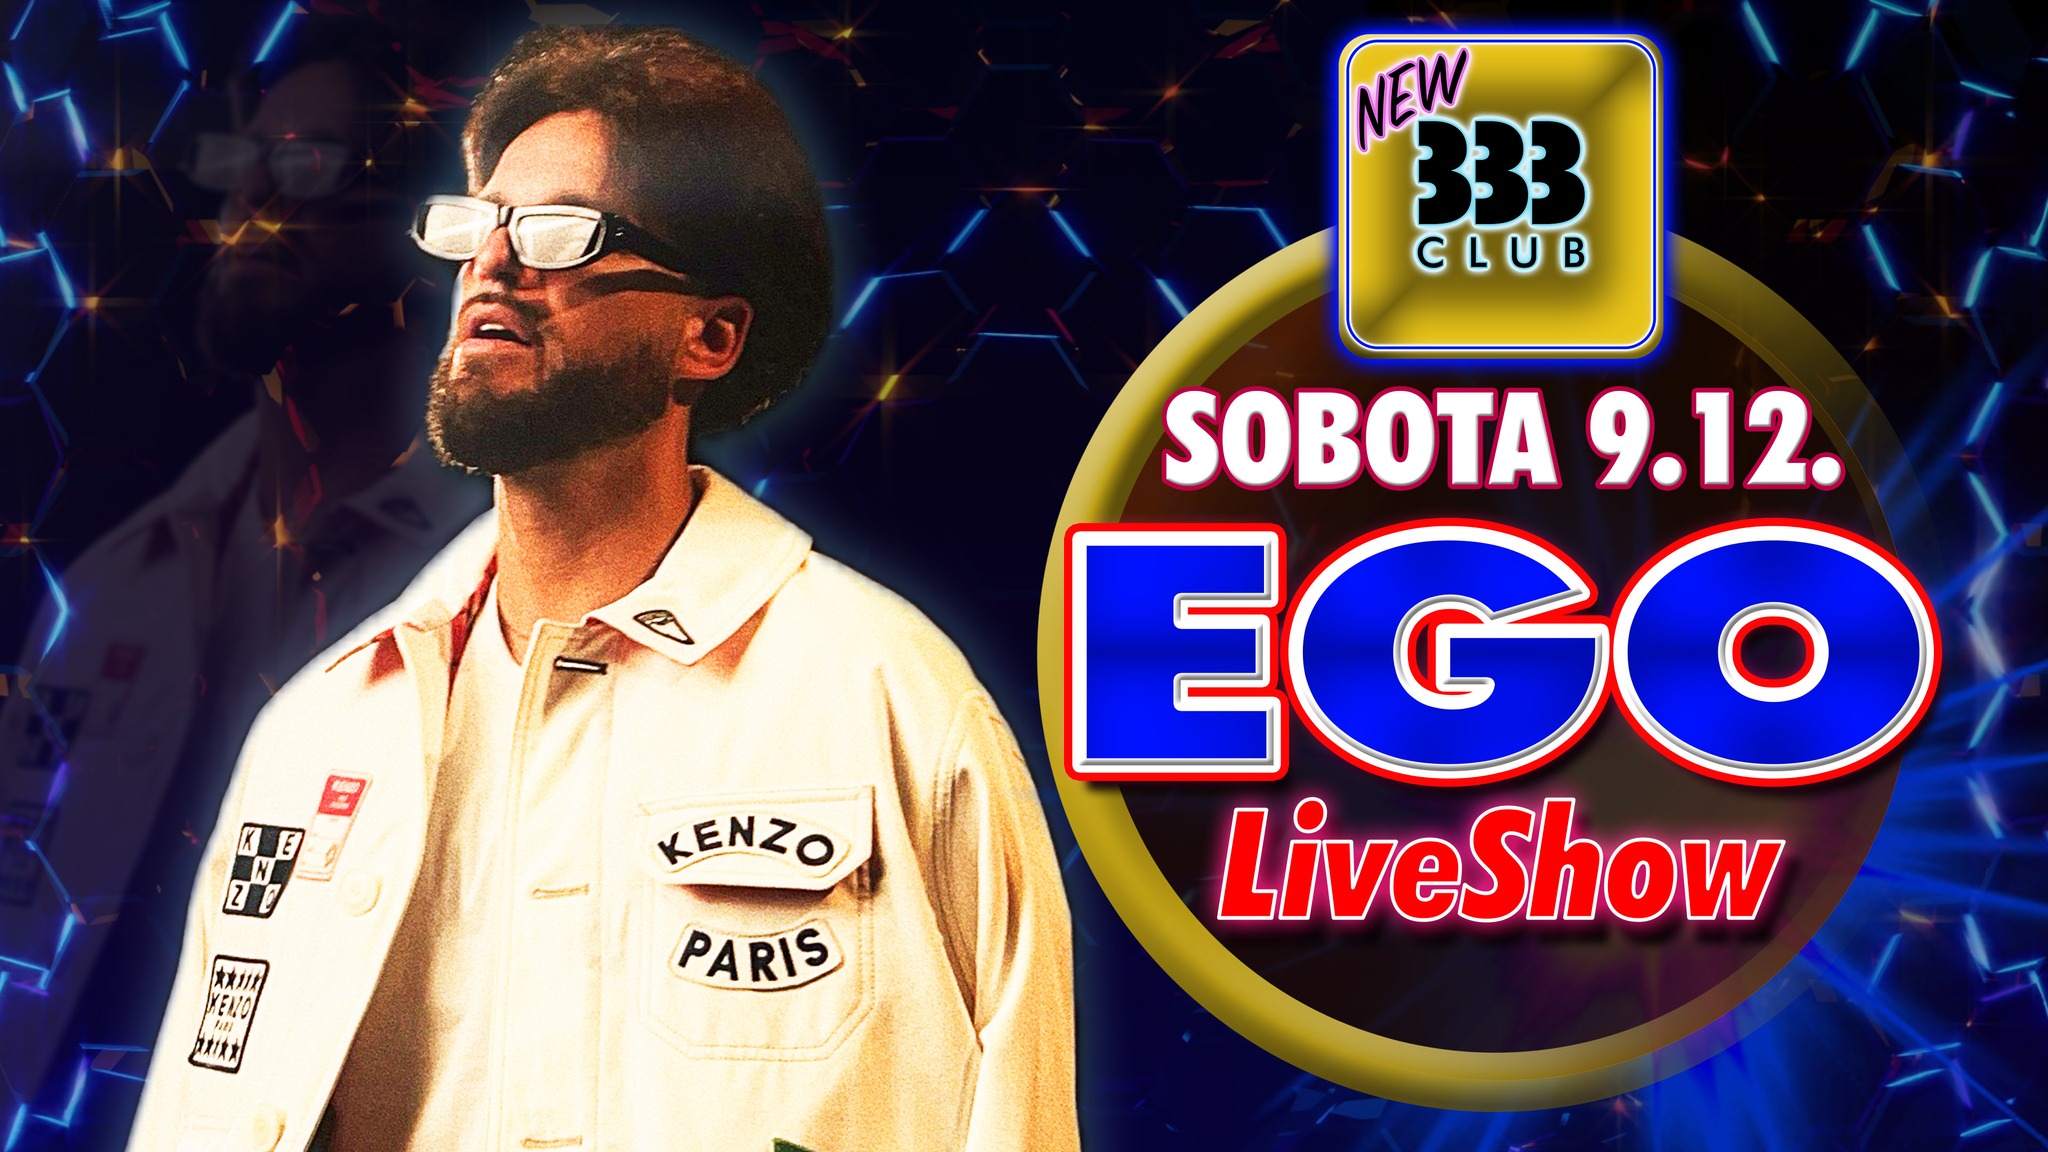 👑 EGO LiveShow @ NEW 333 👑 9.12. Prievidza